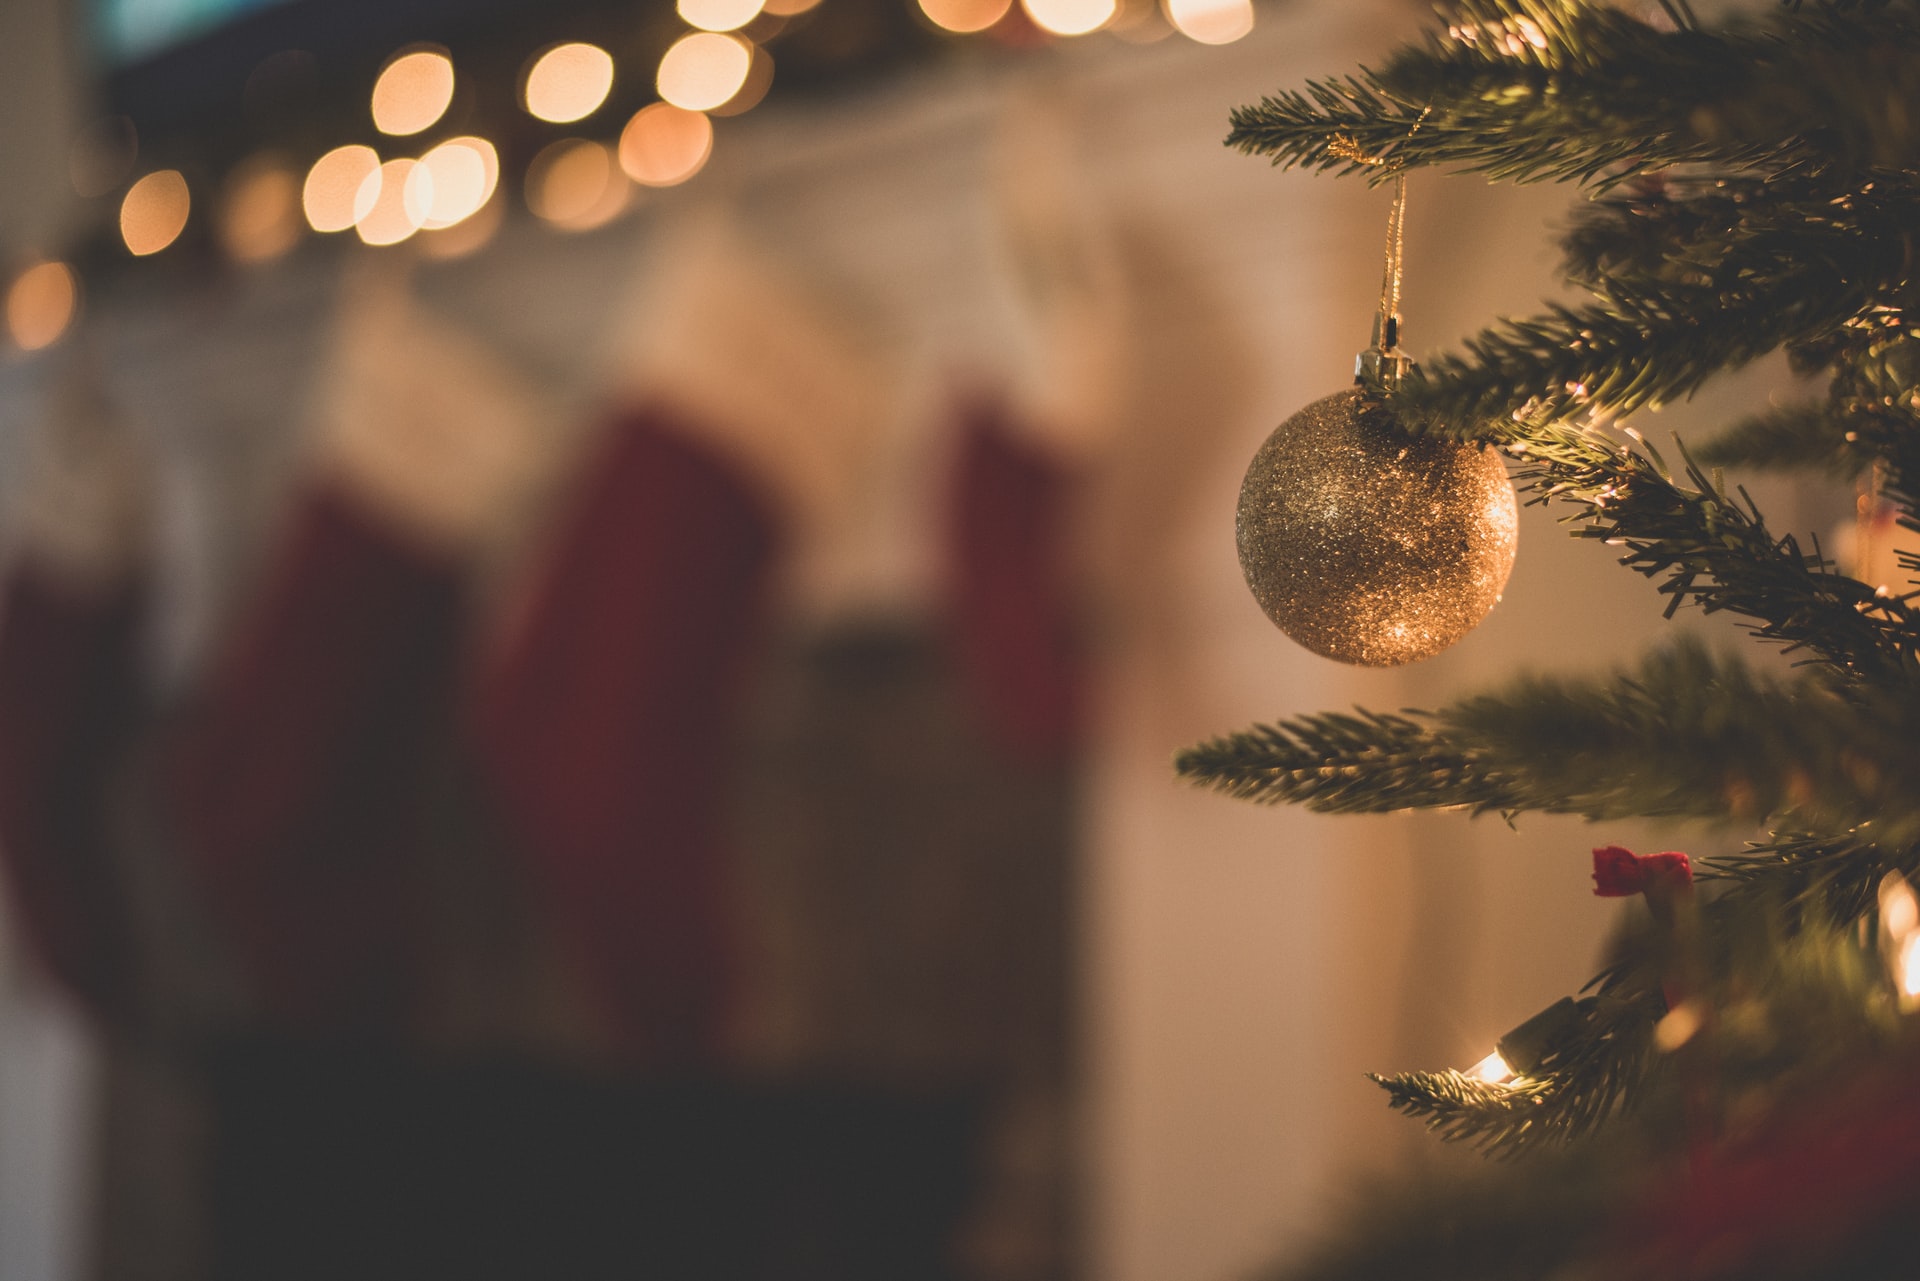 Softly blurred white Christmas lights, stockings, and Christmas tree